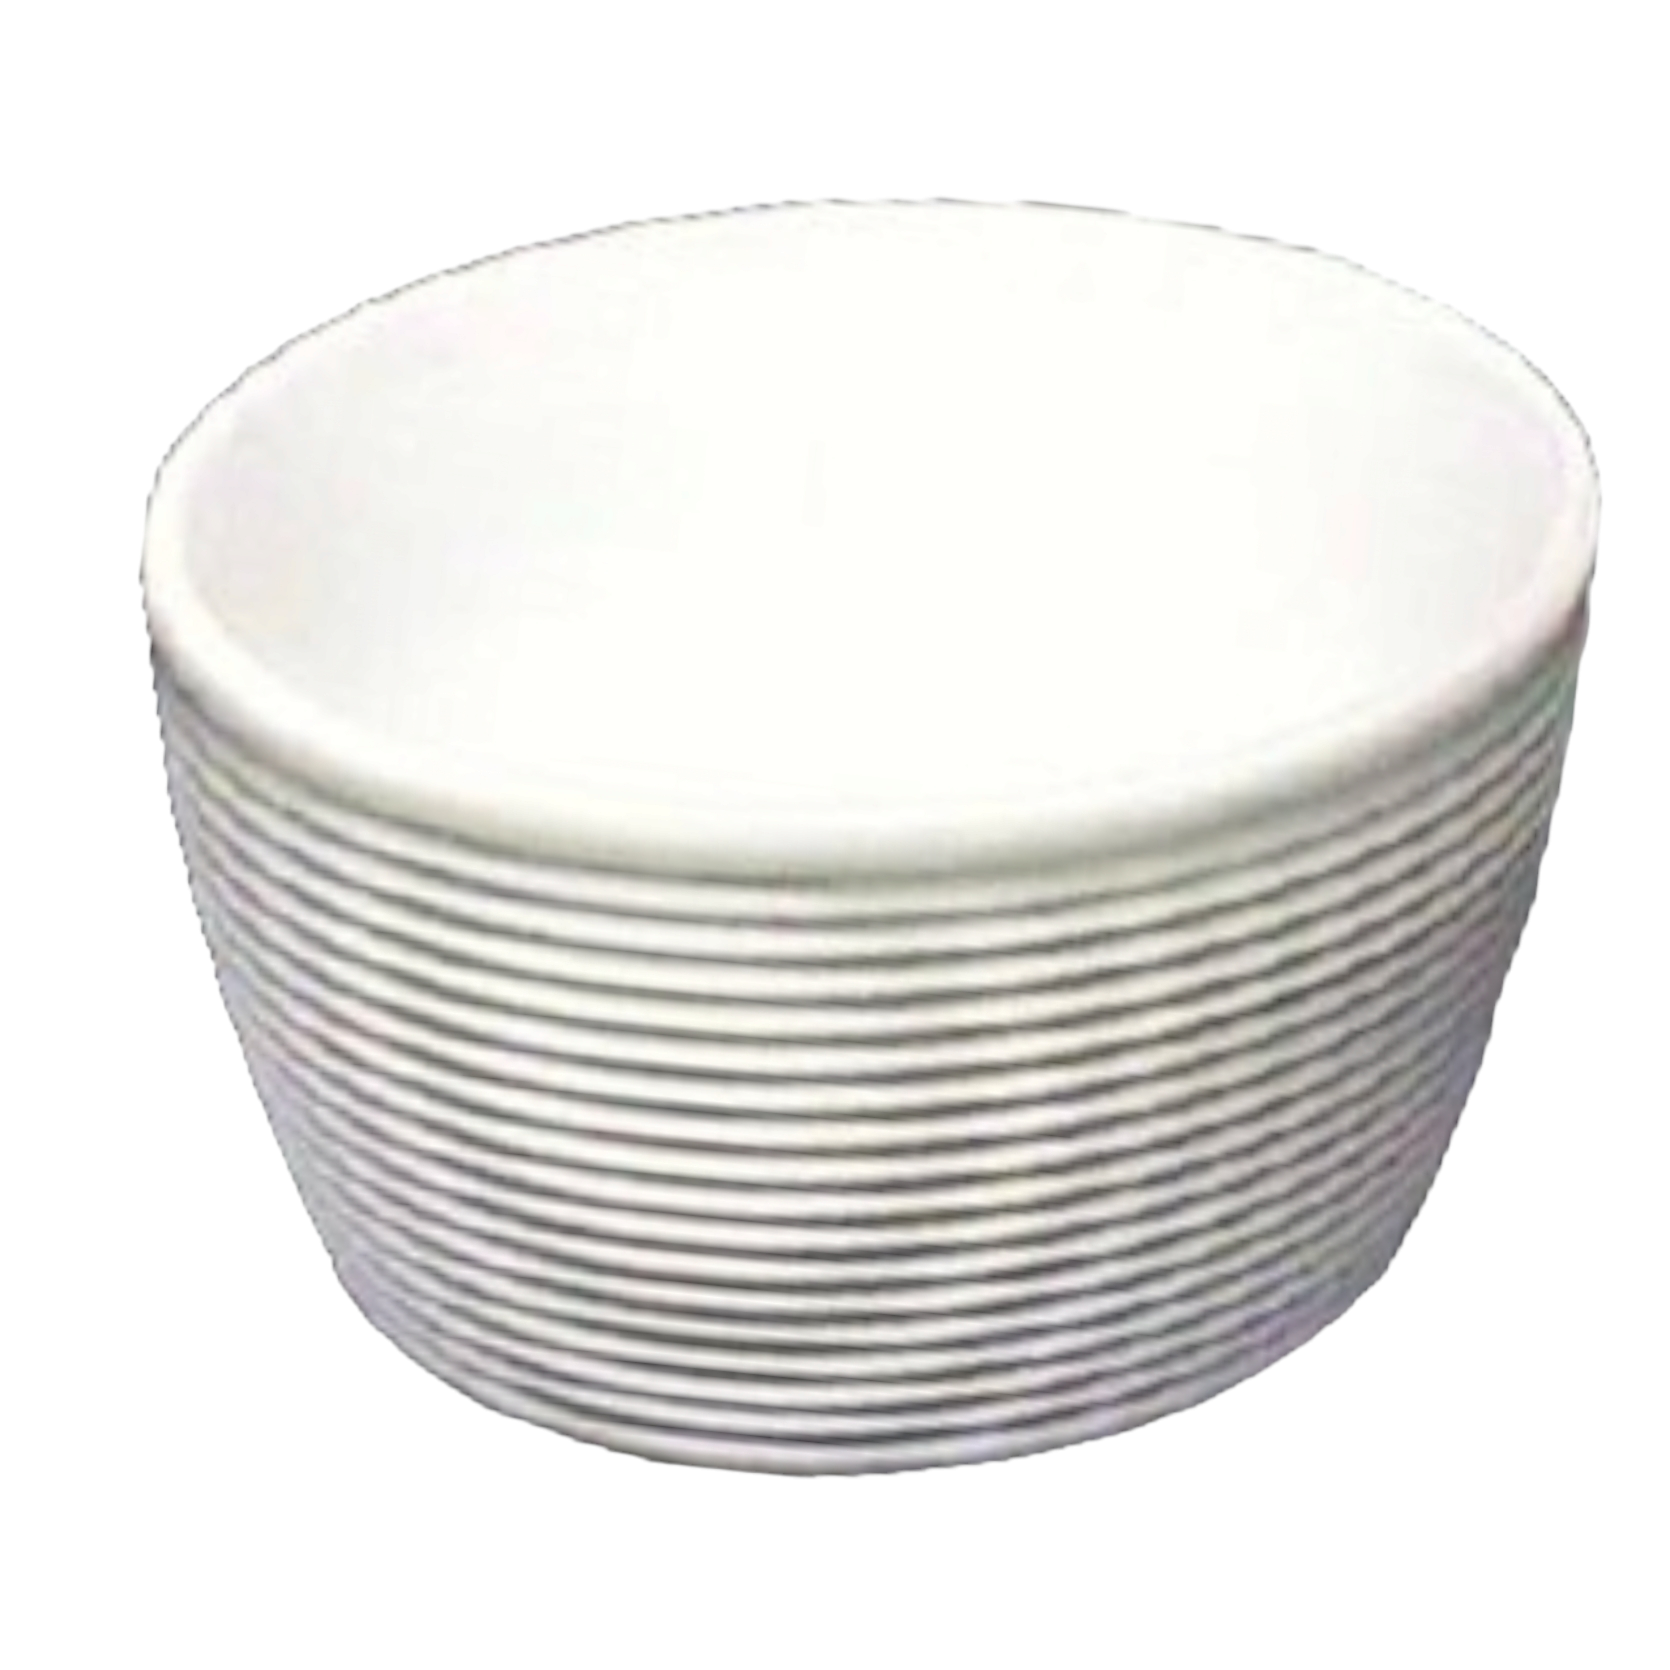 Ceramic White Bowl 5.5Inch